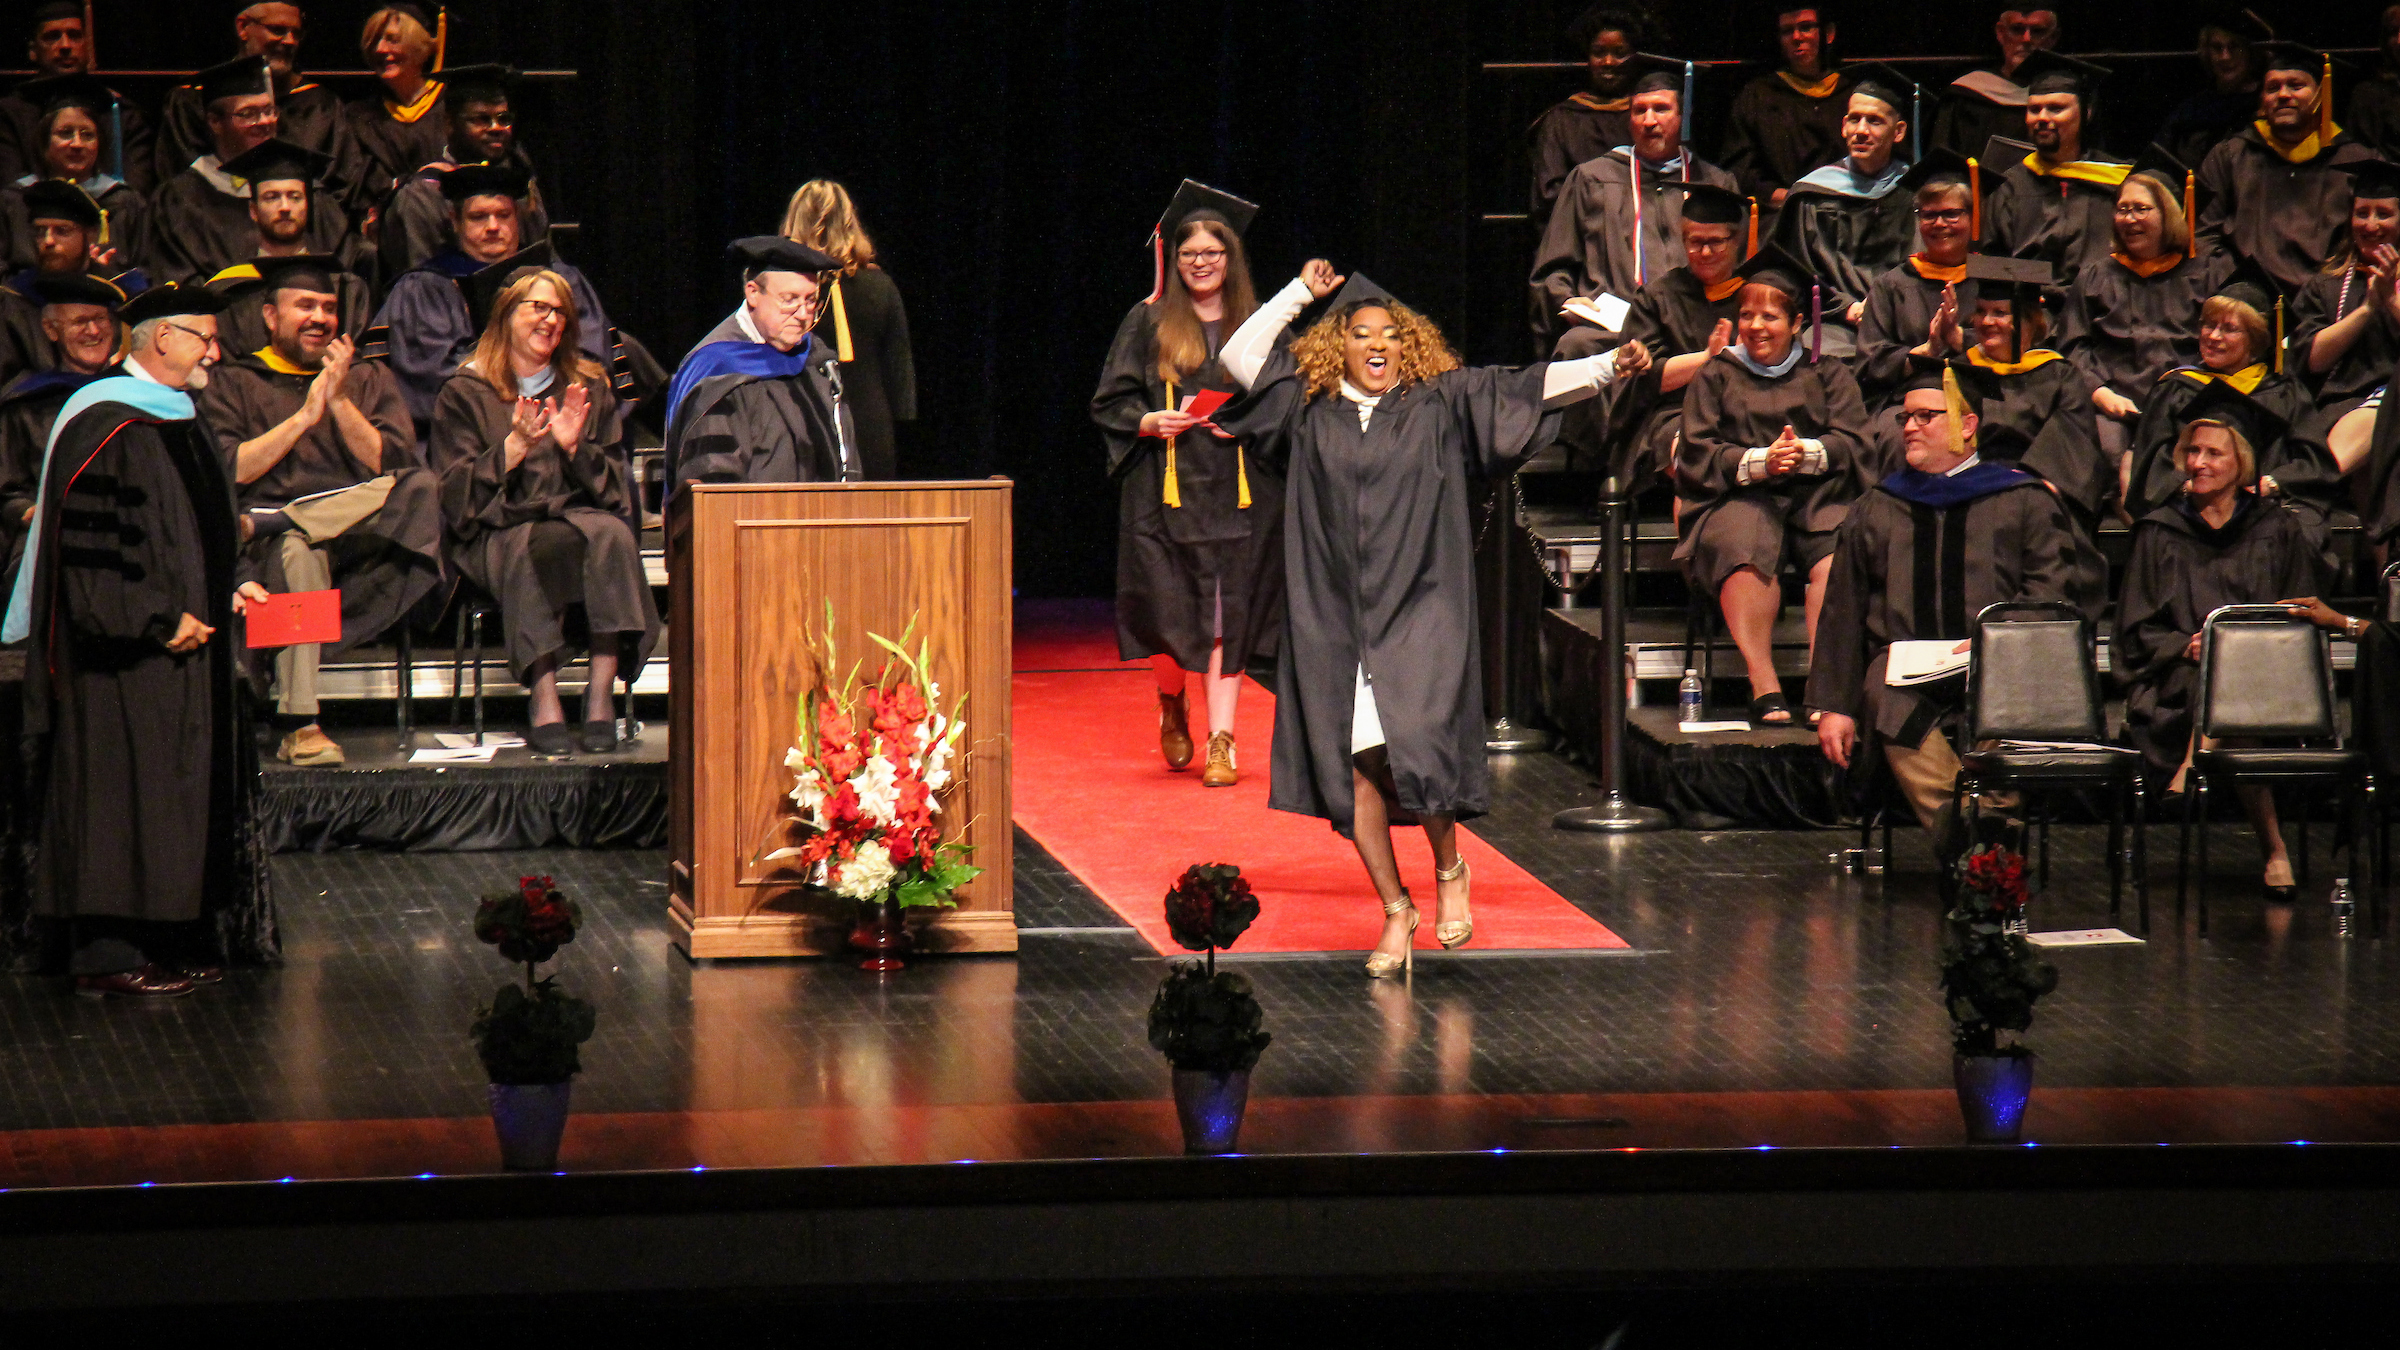 Graduate celebrating at commencement